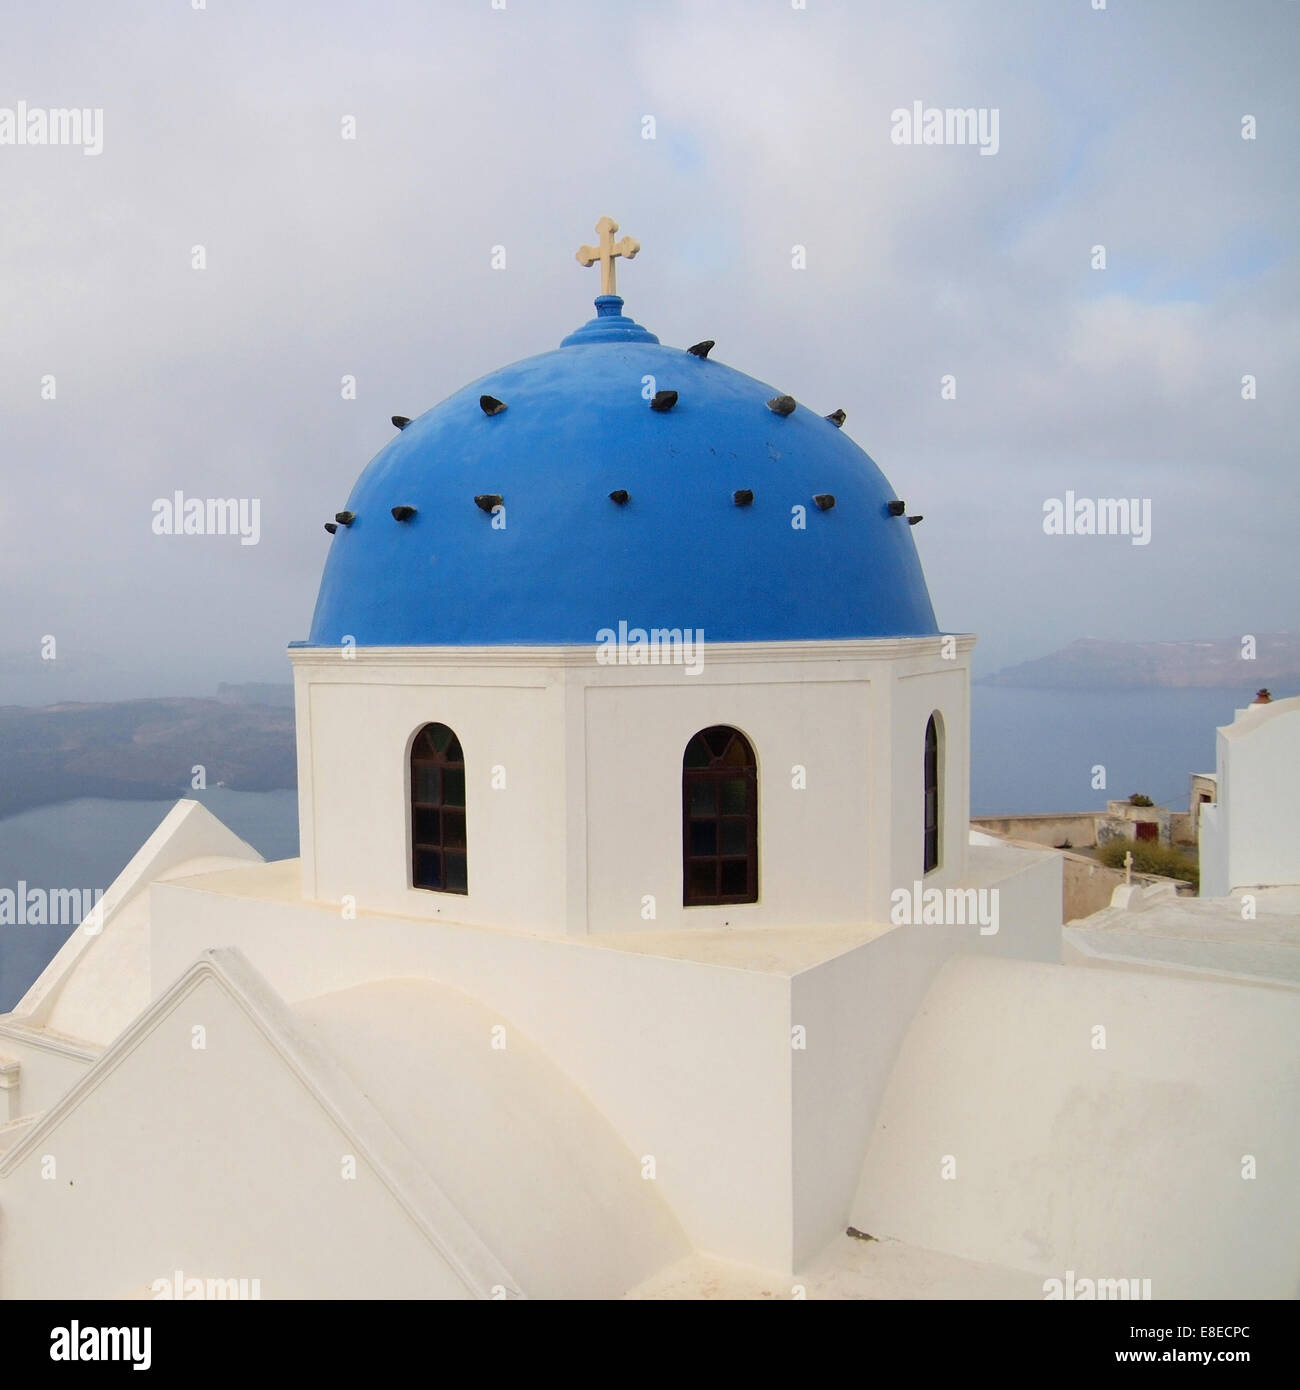 Blue dome of an orthodox church of Imerovigli, Santorini island, Greece. Stock Photo